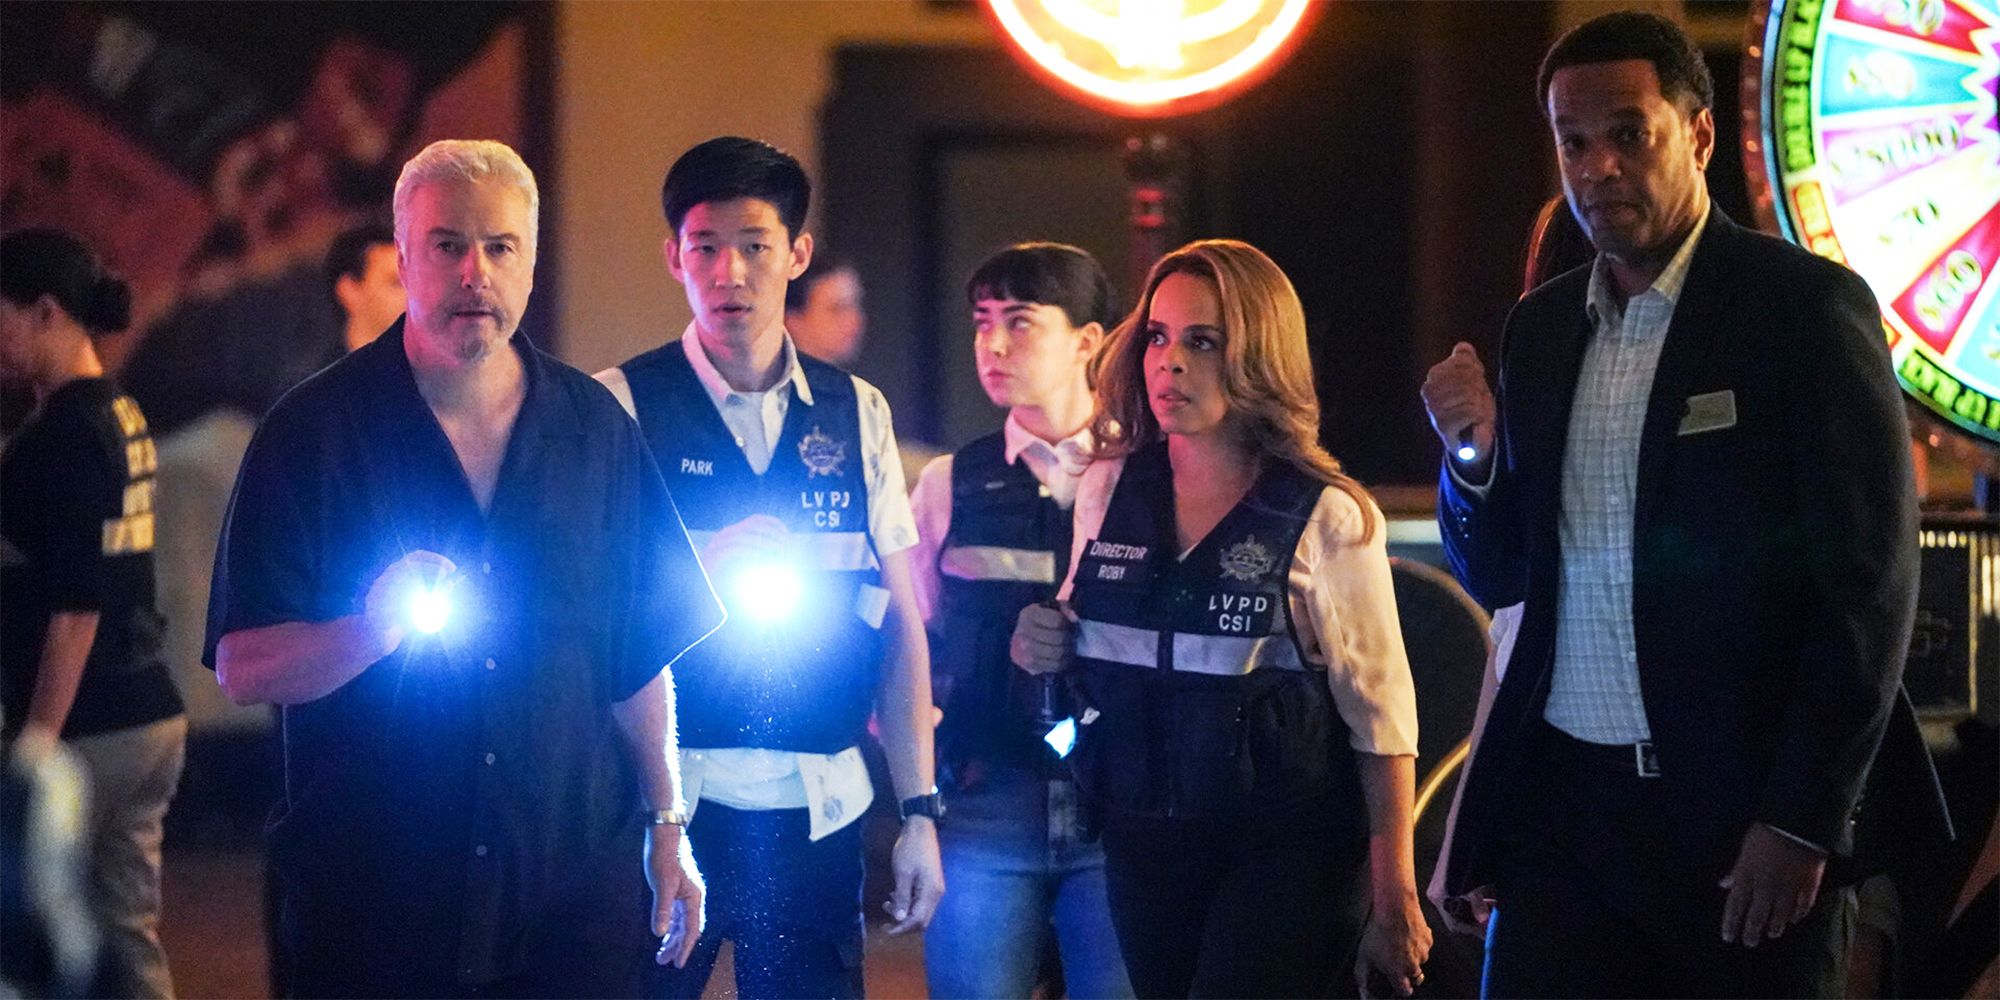 CSI Vegas season 1 cast with flashlights out